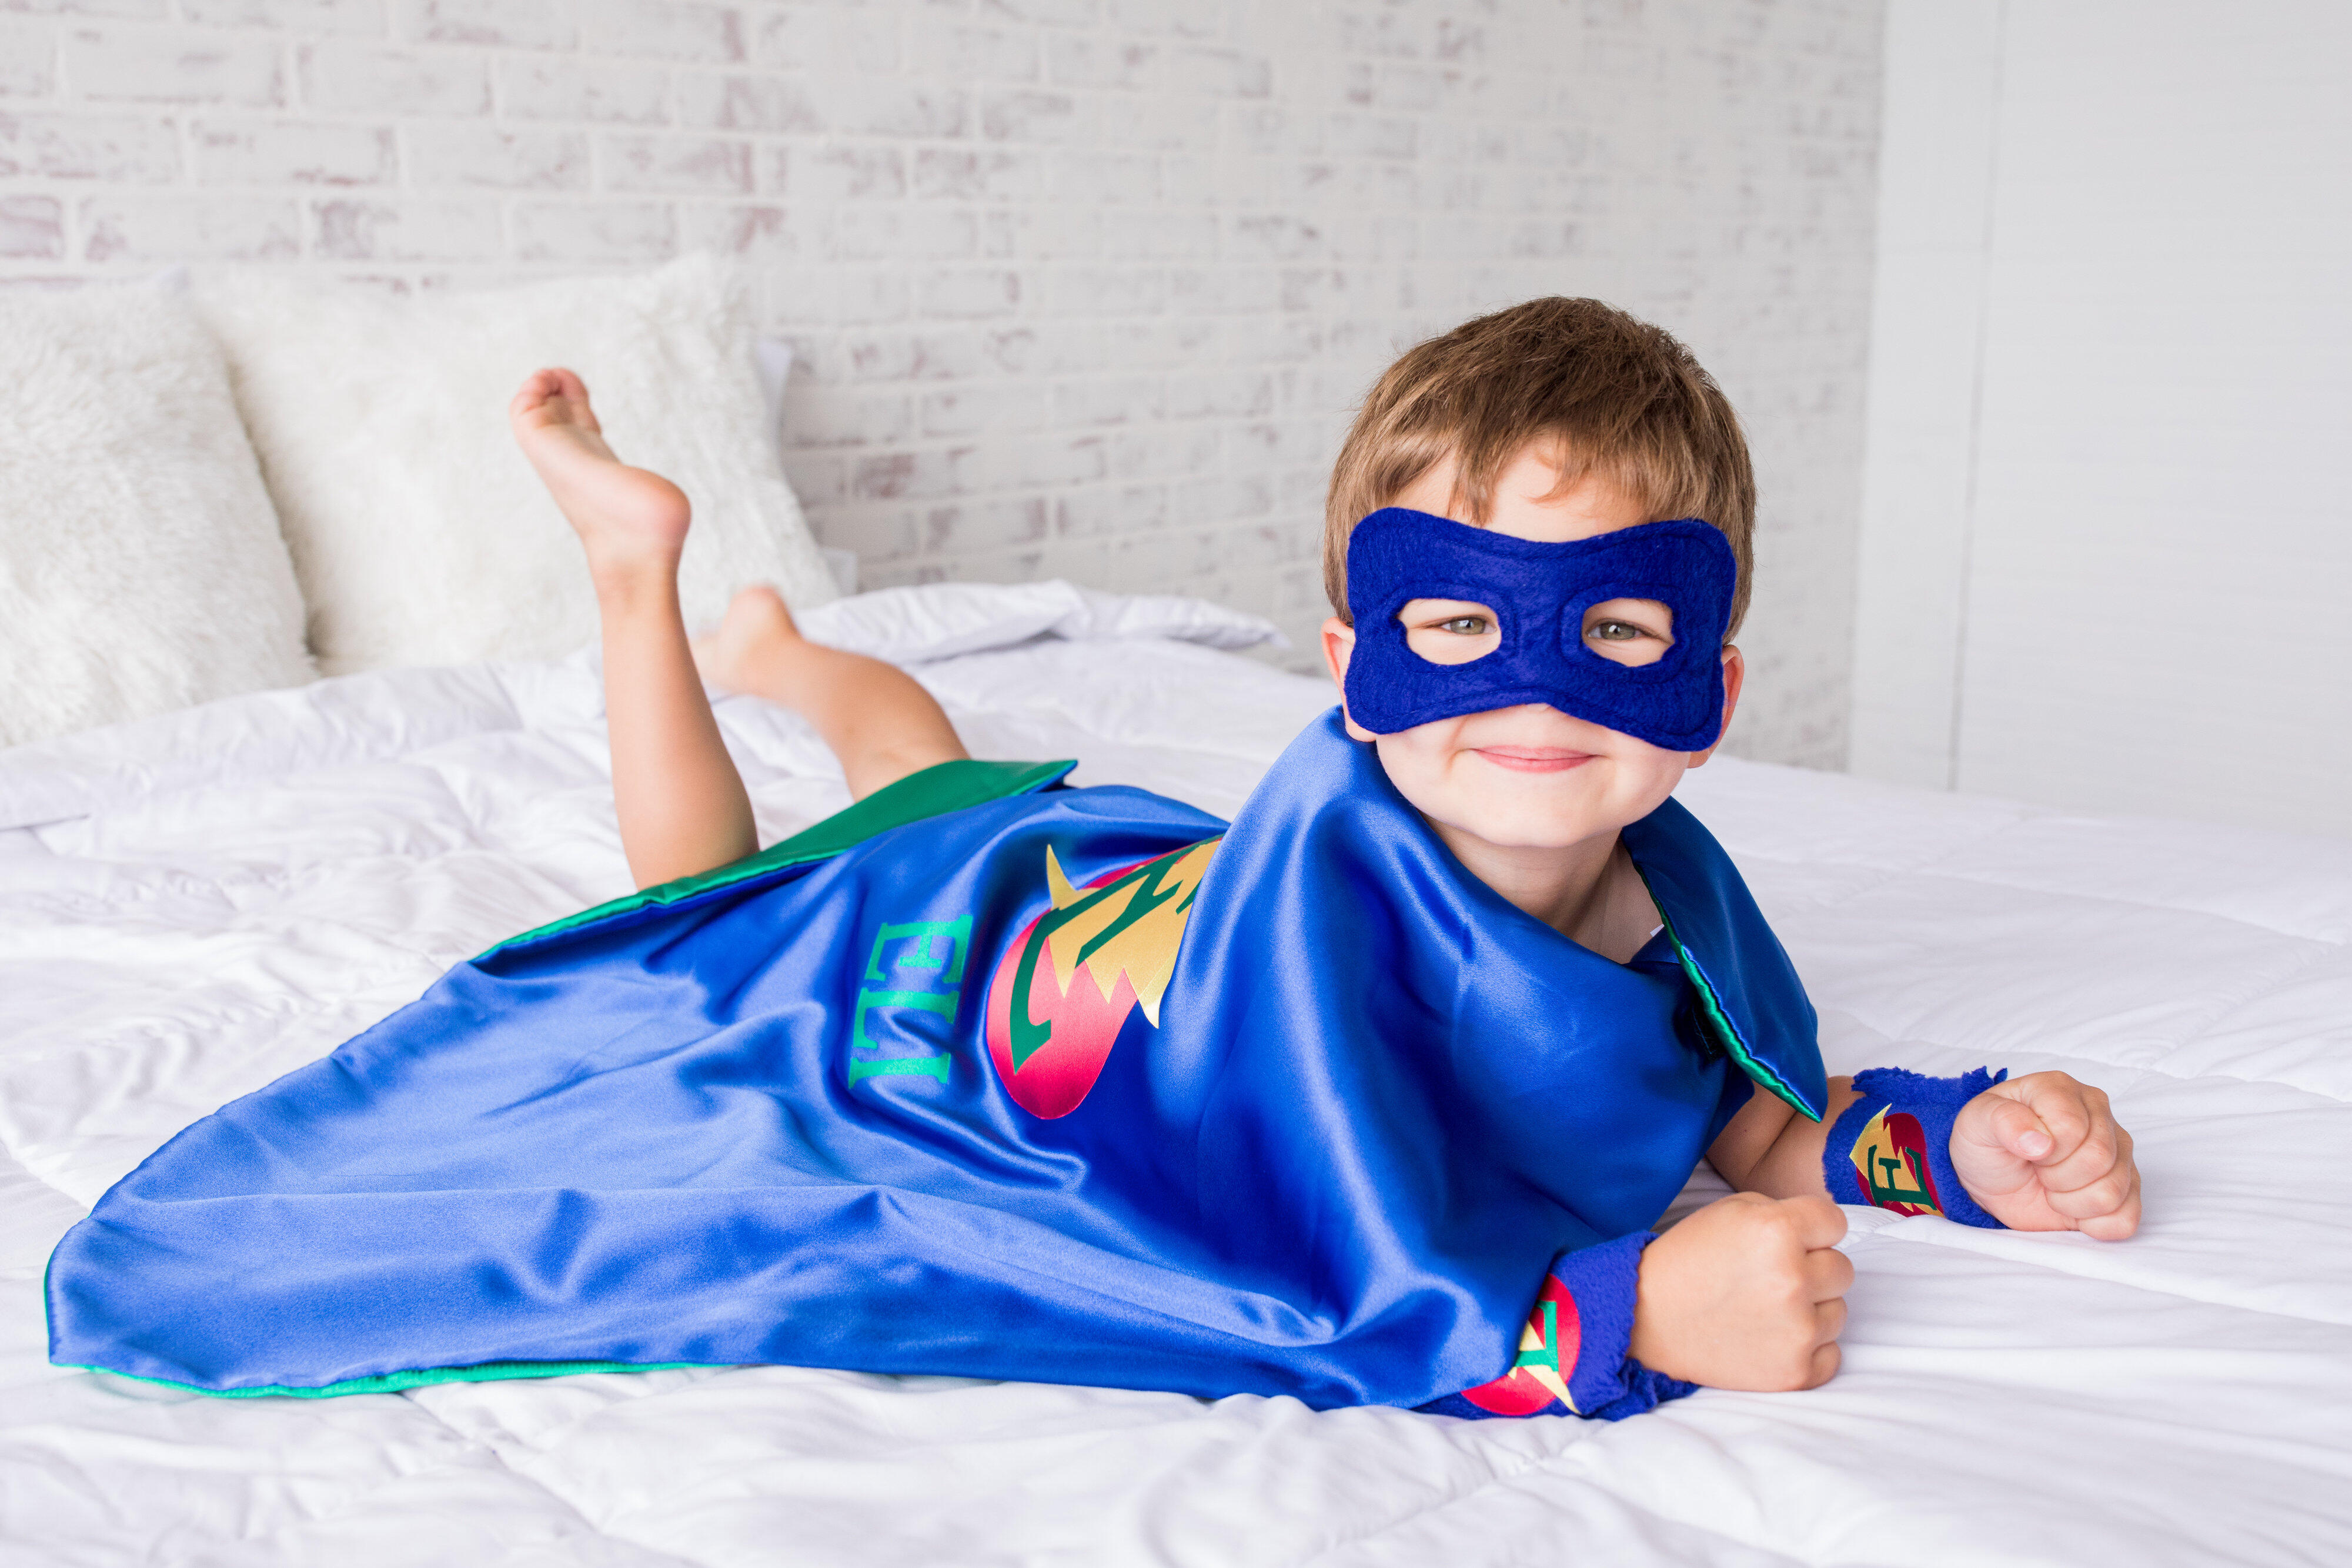 Fun & Games :: Costumes & Accessories :: SUPERHERO CAPE - Kid Cape - Super Hero Cape - Superhero Costume - Superhero Cape Set - Superhero party - Armband - - Mask